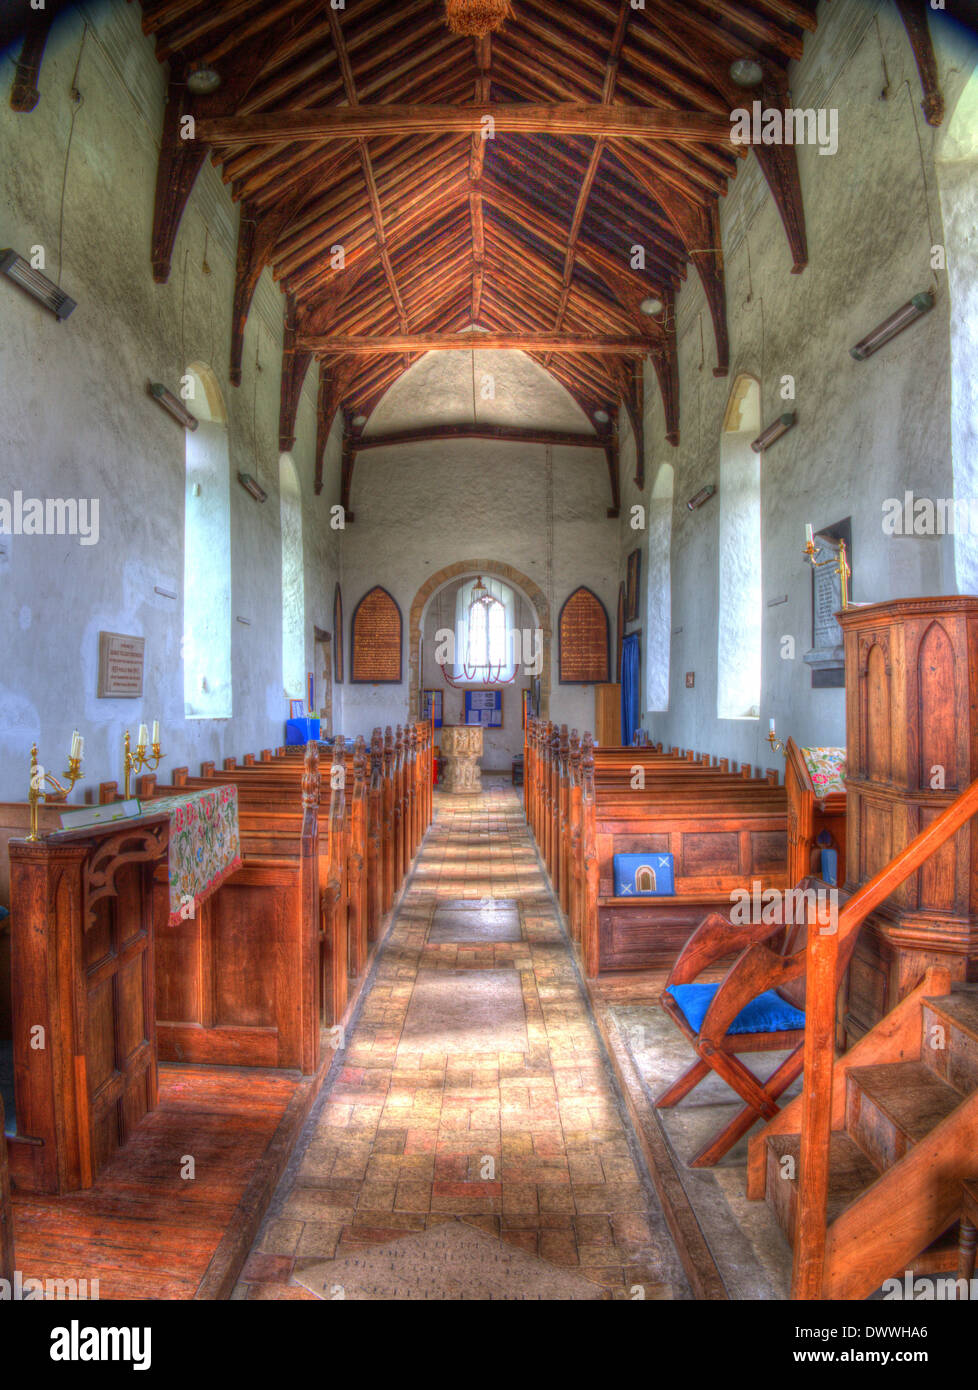 The eleventh century flint parish church of Saint Andrew in Wissett, Suffolk, England. Stock Photo